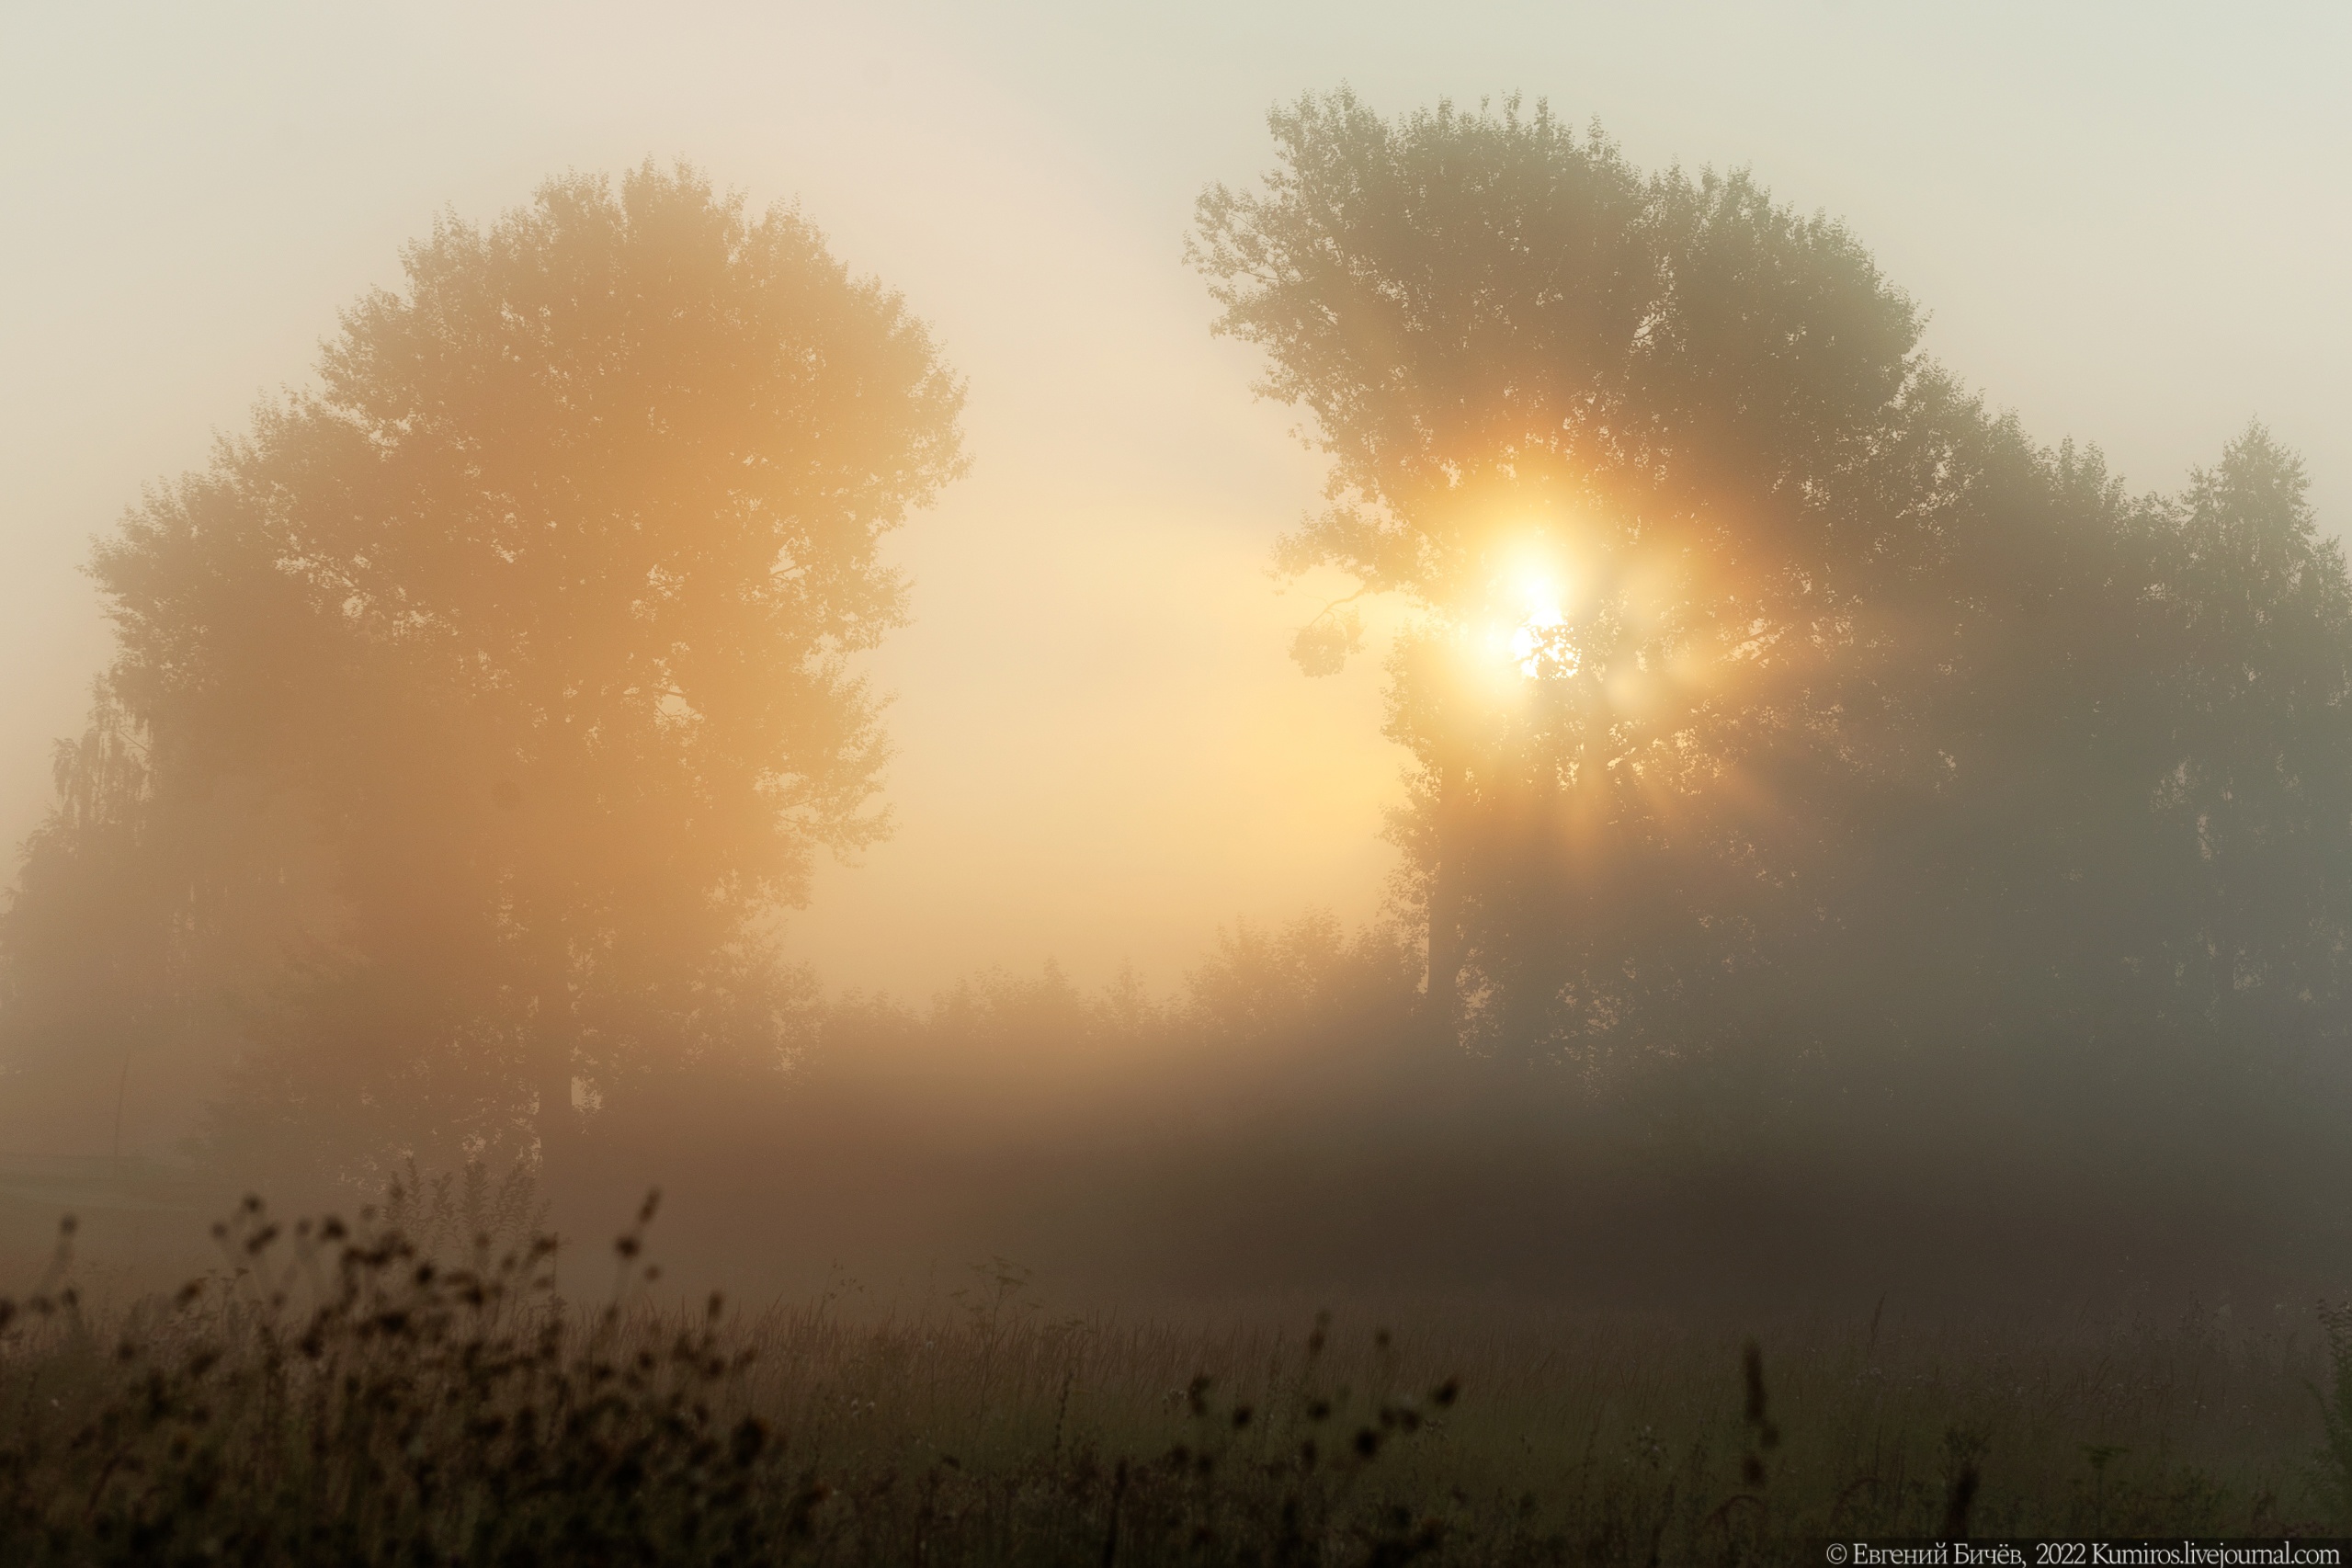 Текст доброе утро туманное. Туманное утро фото. Суббота утро туман. Доброе туманное утро картинки. Утро туманное картинки прикольные.